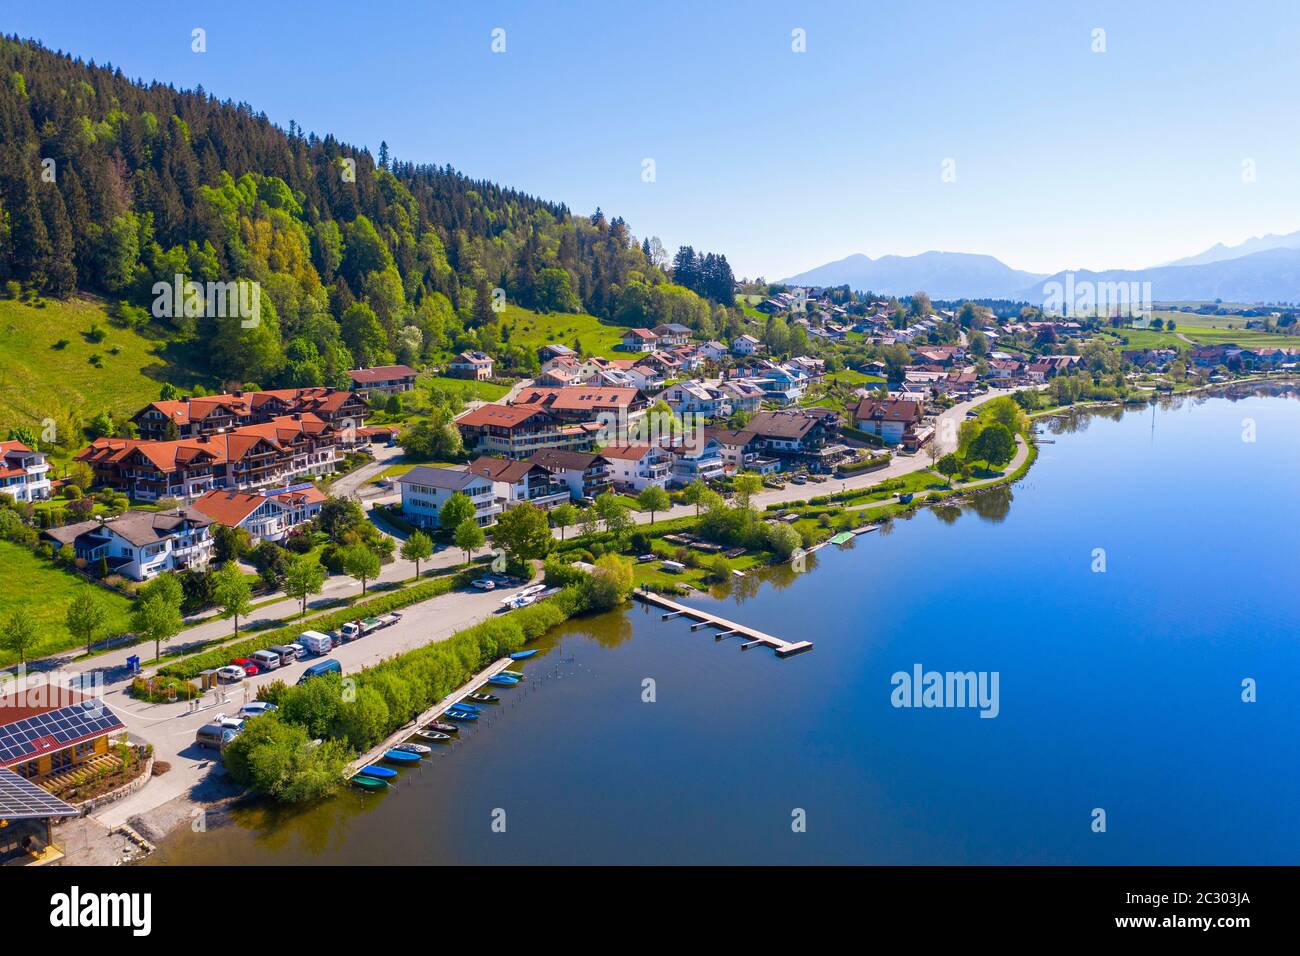 Hopfen am See, Hopfensee, vicino a Fuessen, Drone Uptake, Ostallgaeu, Allgaeu, Swabia, Alpino, Baviera, Germania Foto Stock